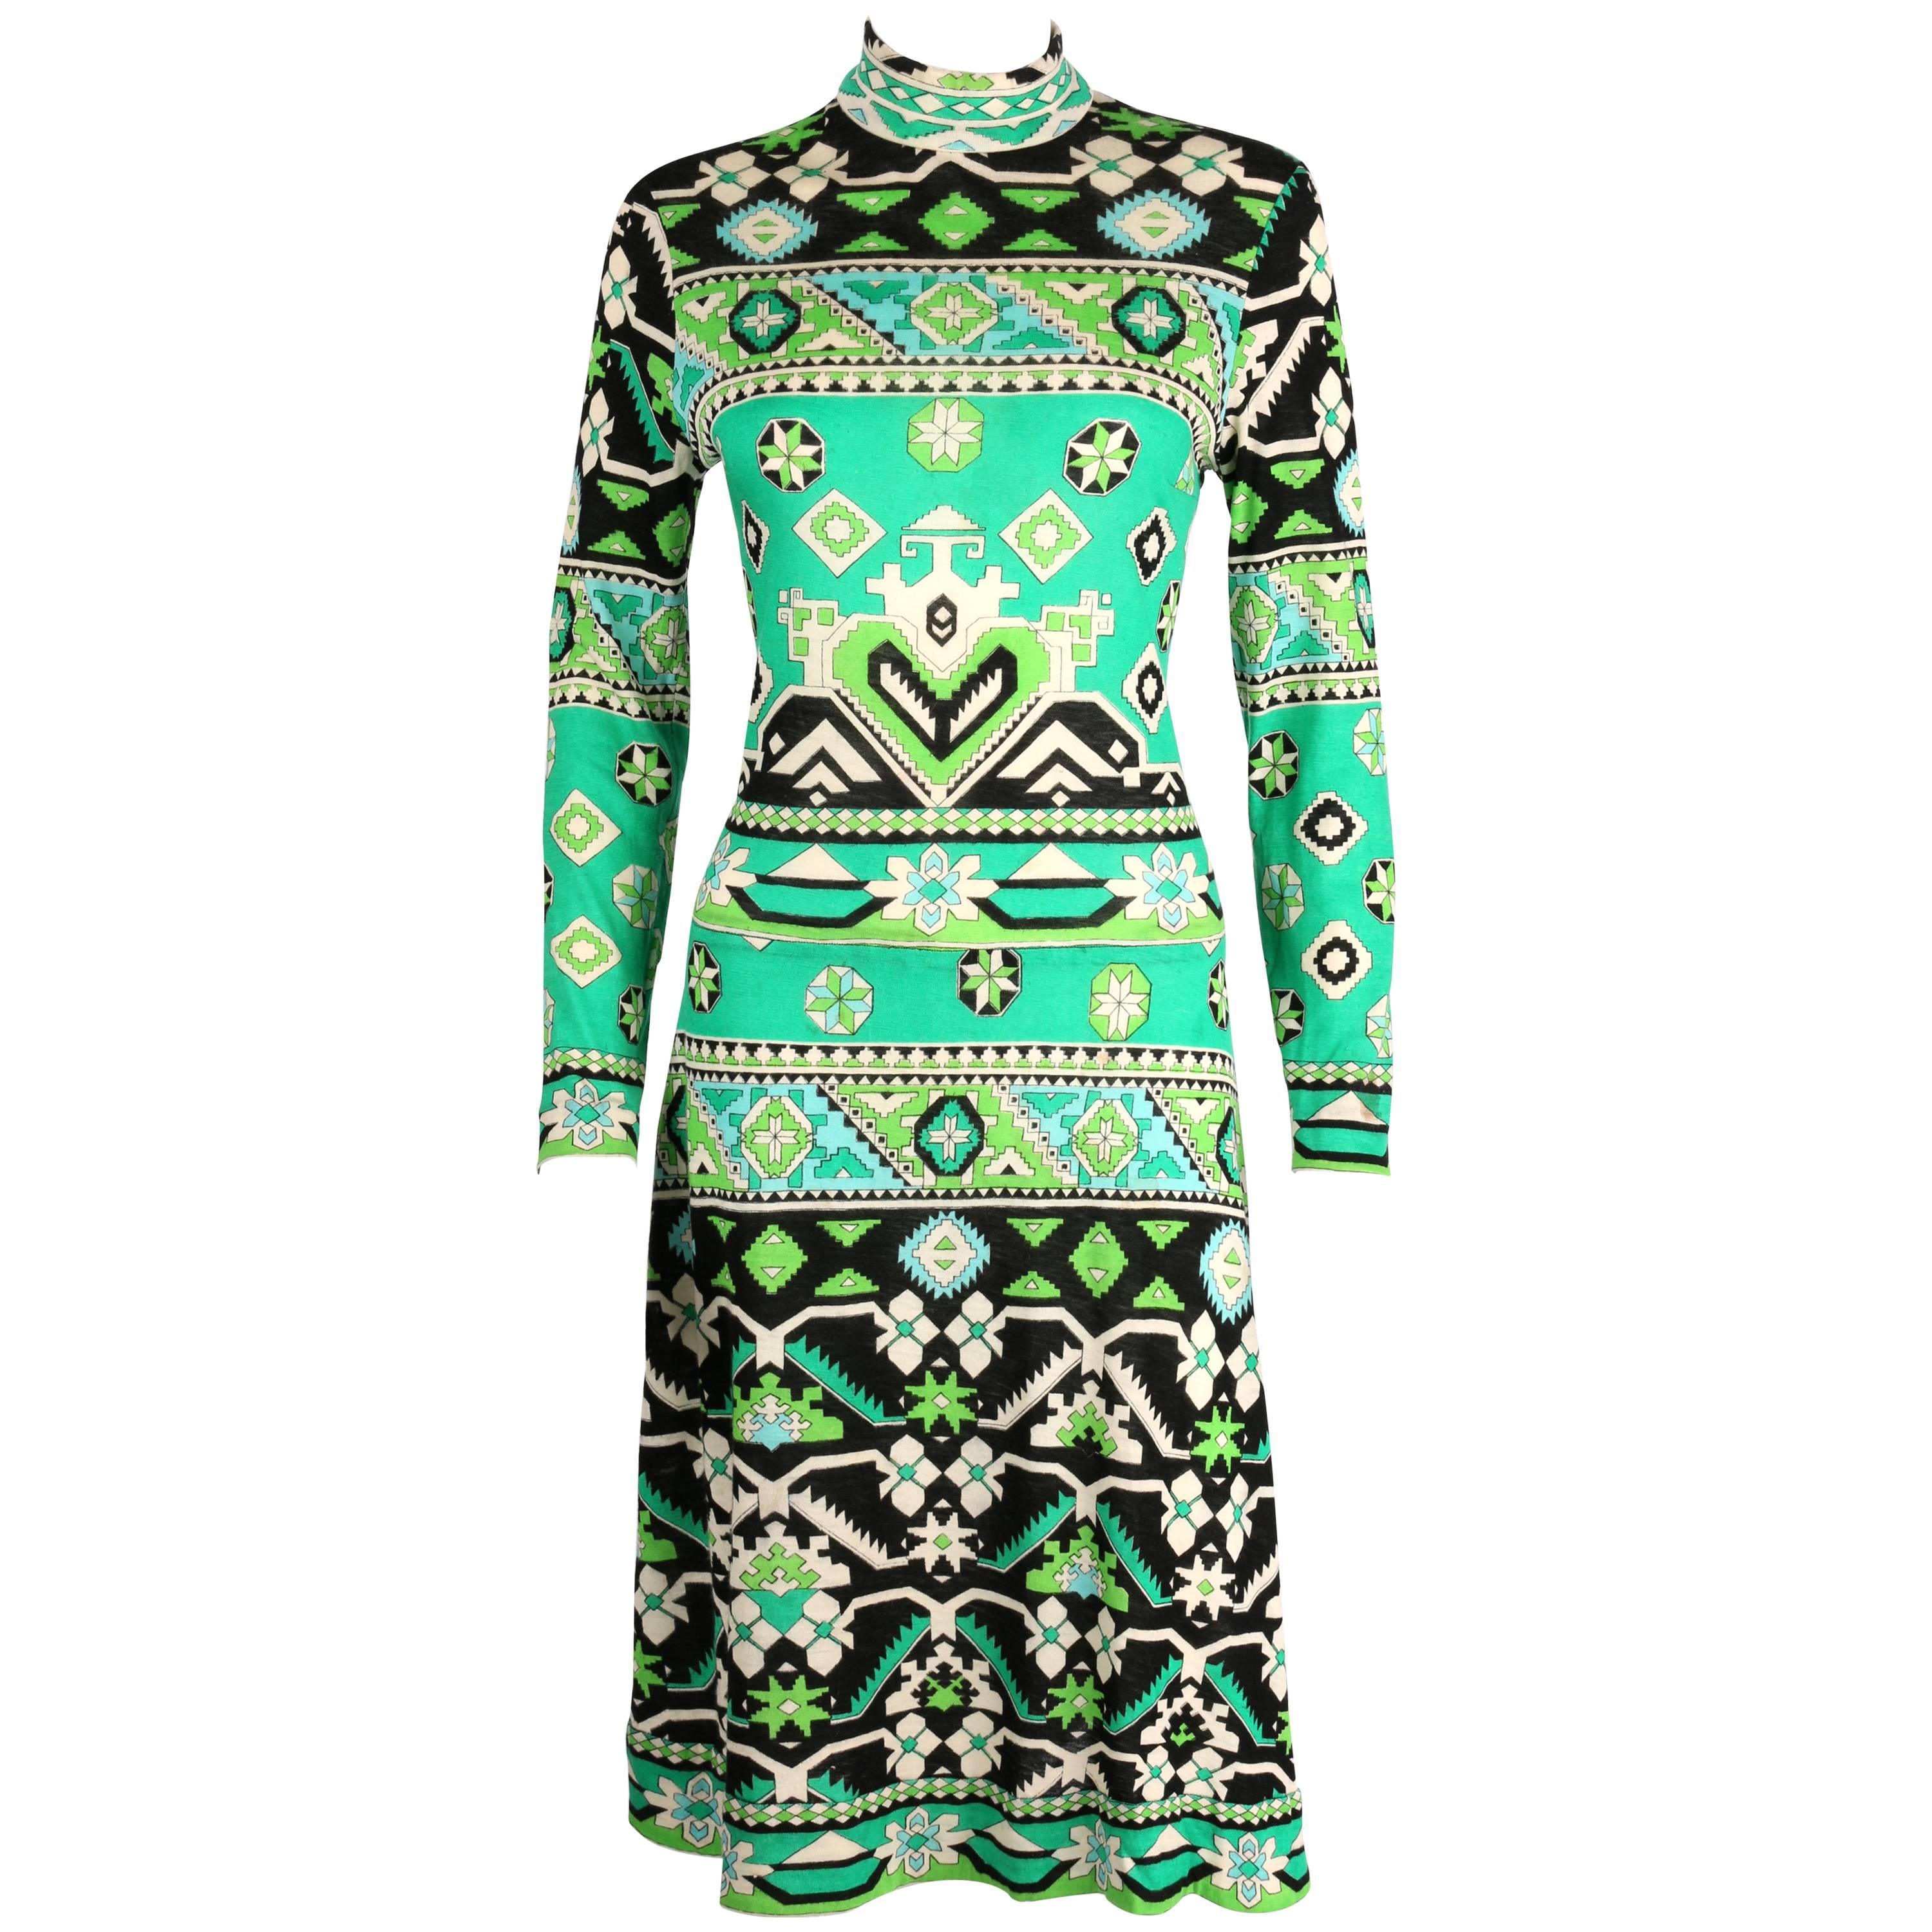 LEONARD PARIS 1960s Jade Green Tribal Floral Print Cashmere Jersey Knit Dress